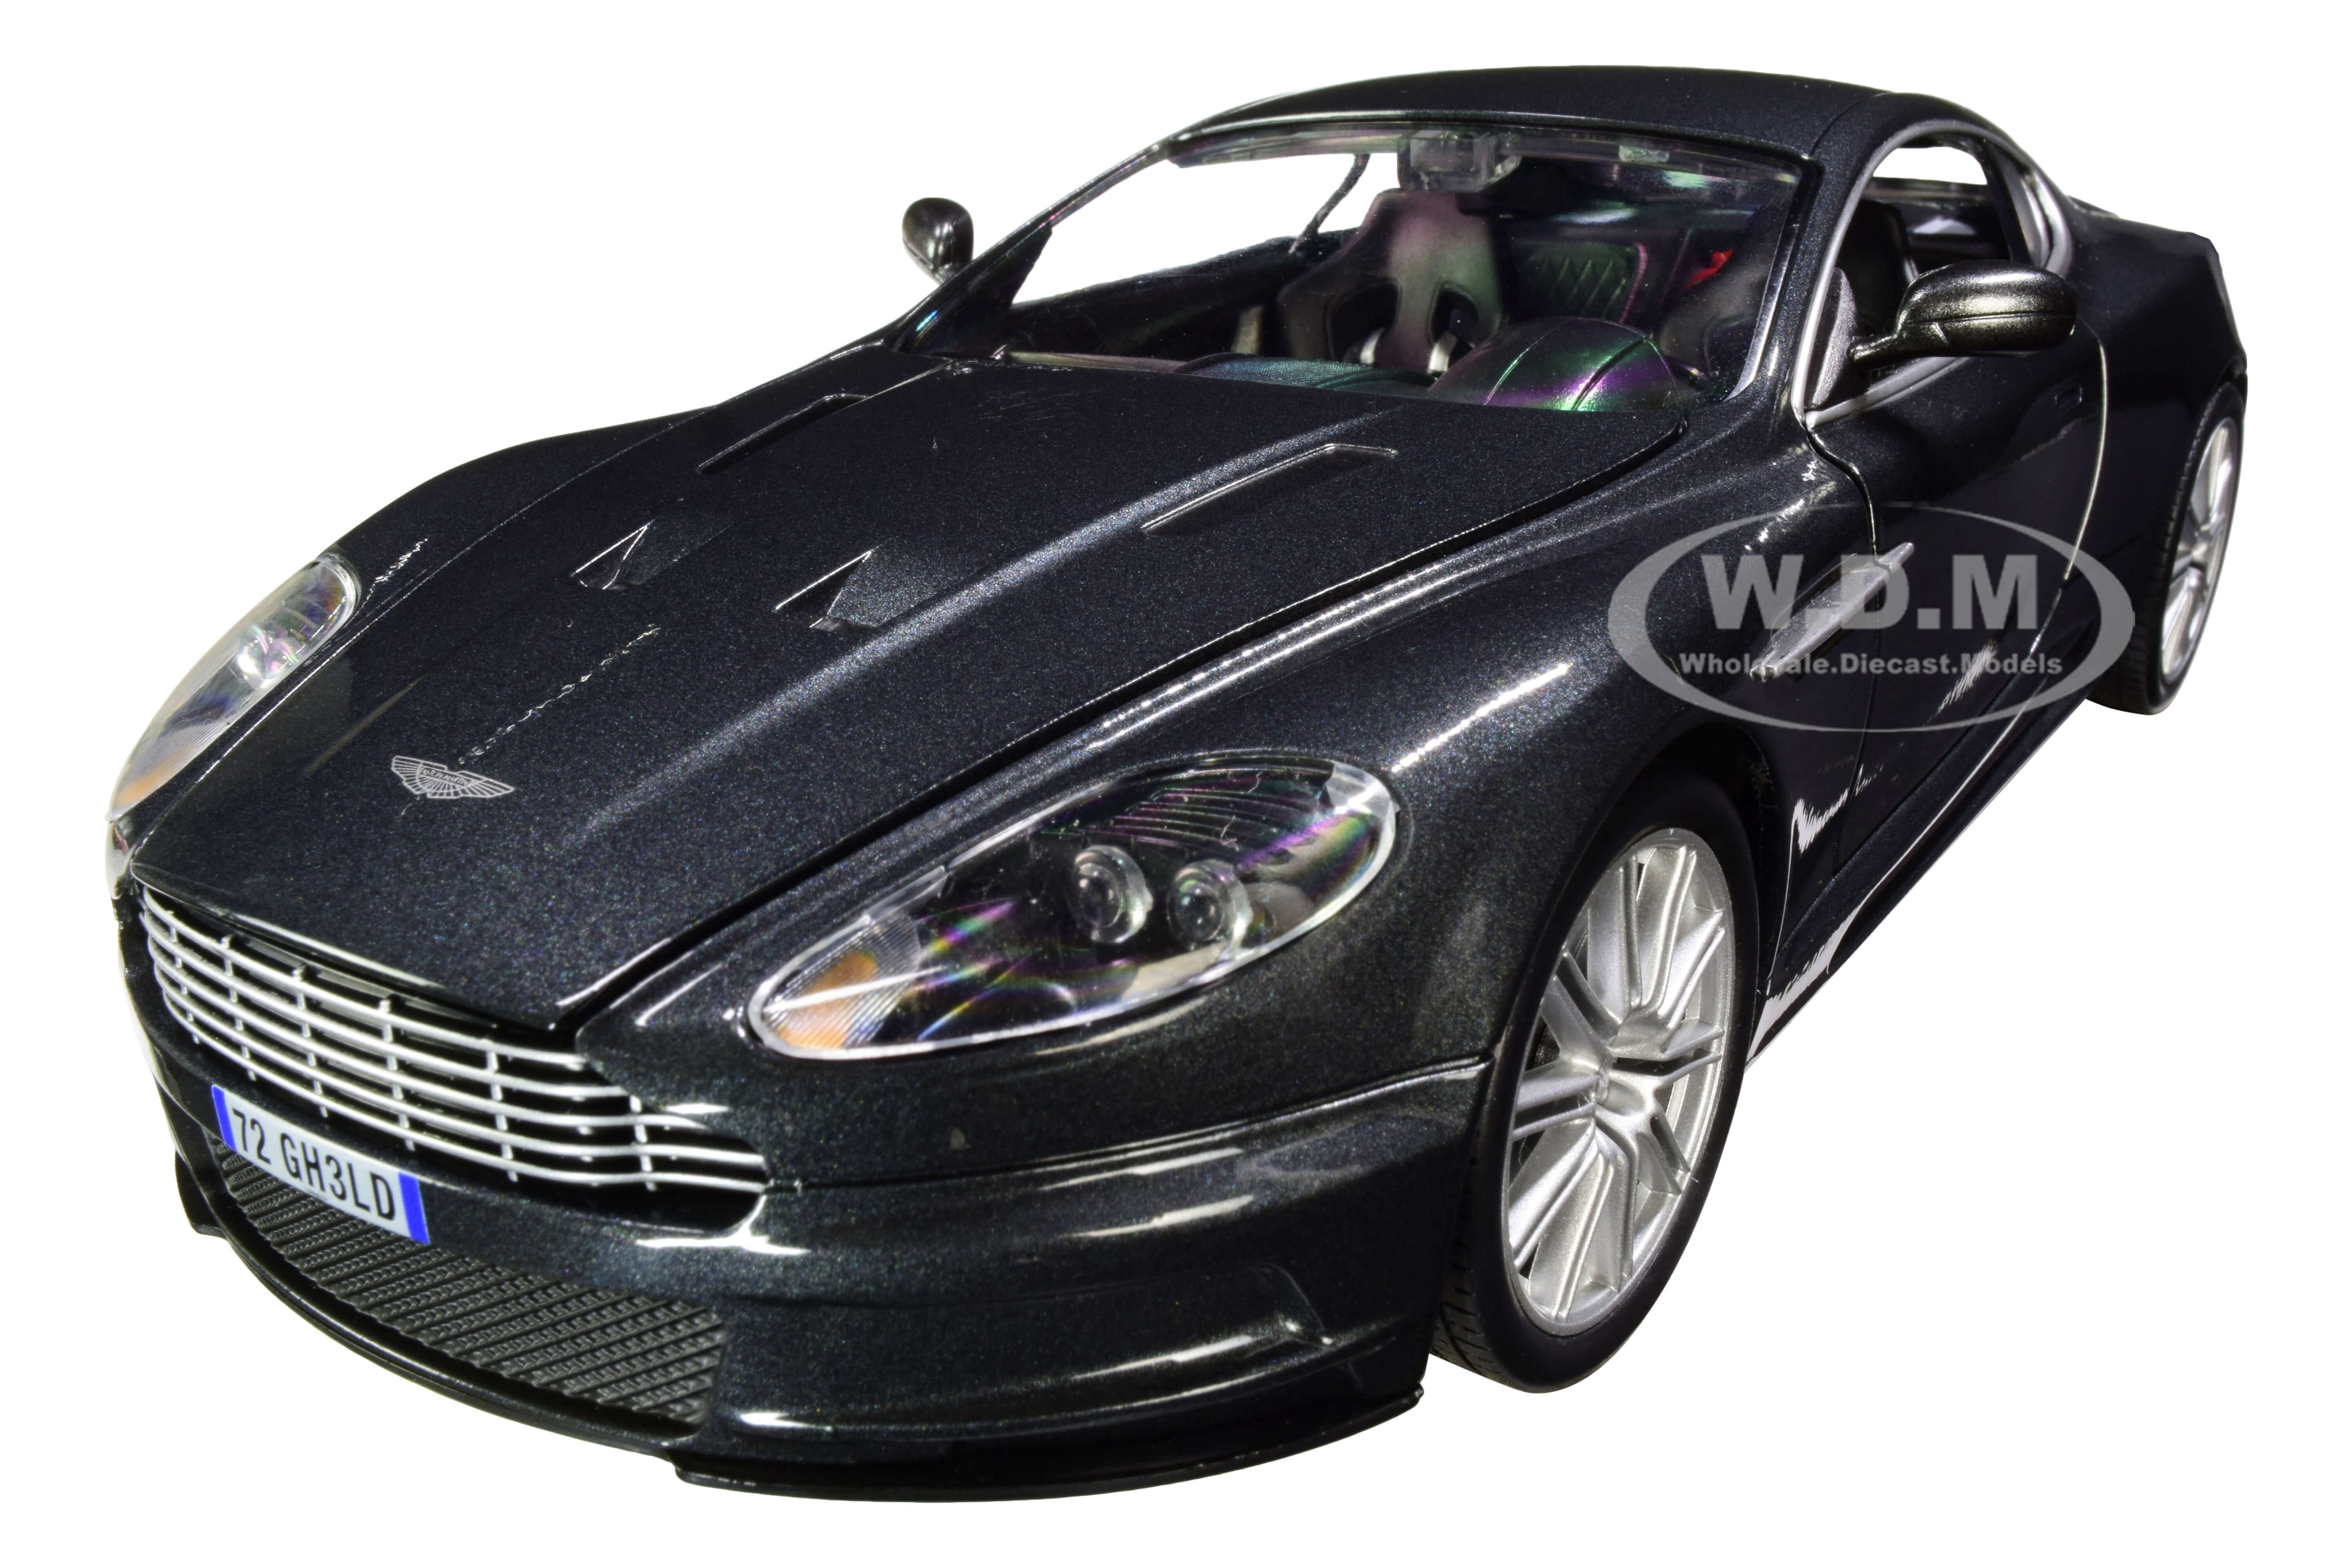 Aston Martin DBS Quantum Silver / Dark Gray Metallic (James Bond 007) Quantum of Solace (2008) Movie 1/18 Diecast Model Car by Auto World